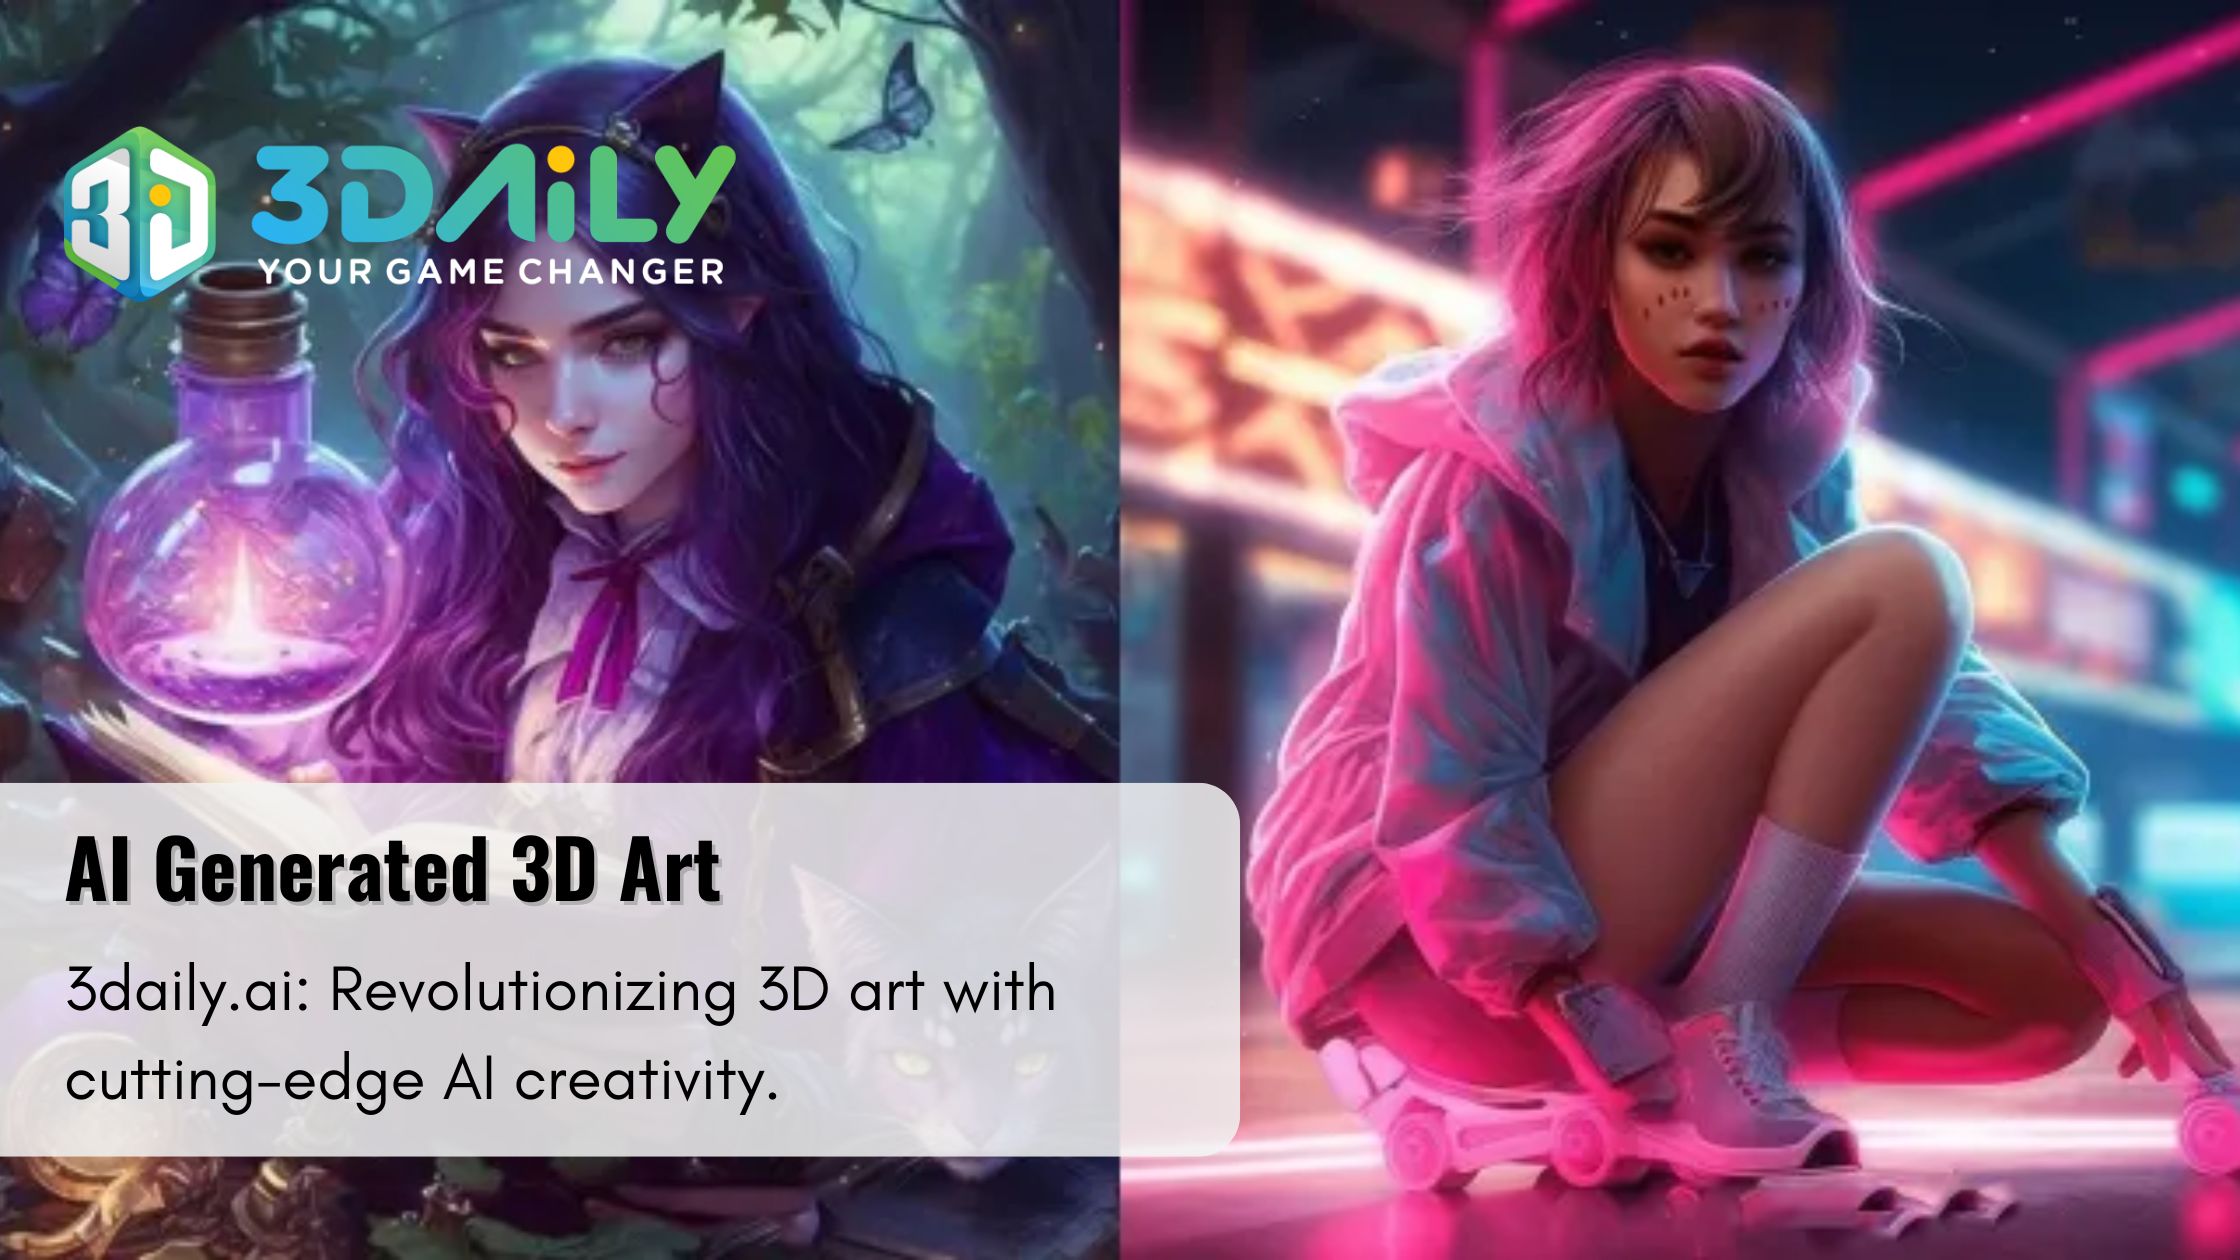 Exploring the Future of Creativity 3D Art Generators AI